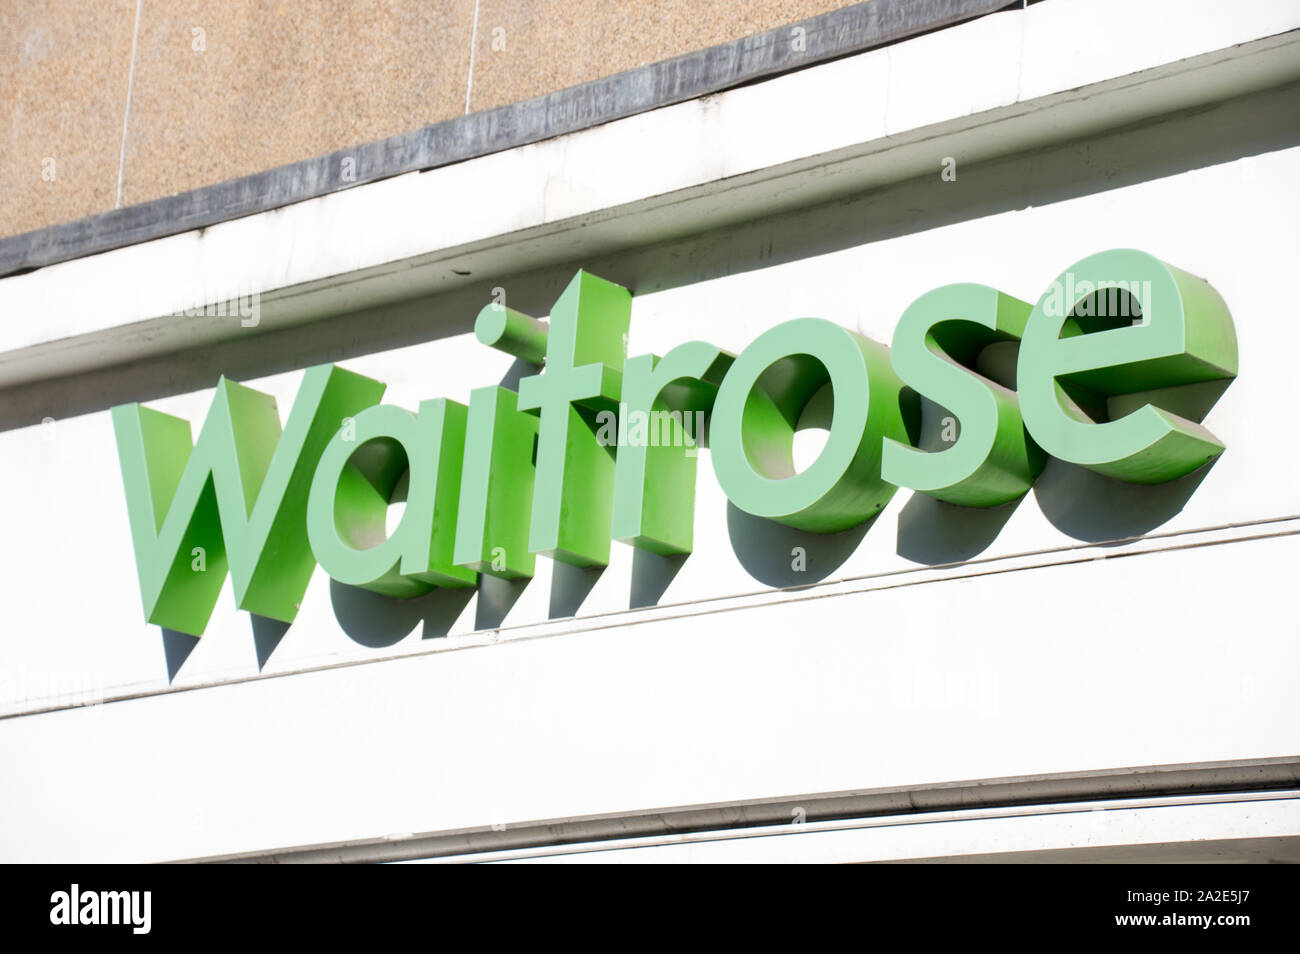 Waitrose store sign in London Stock Photo